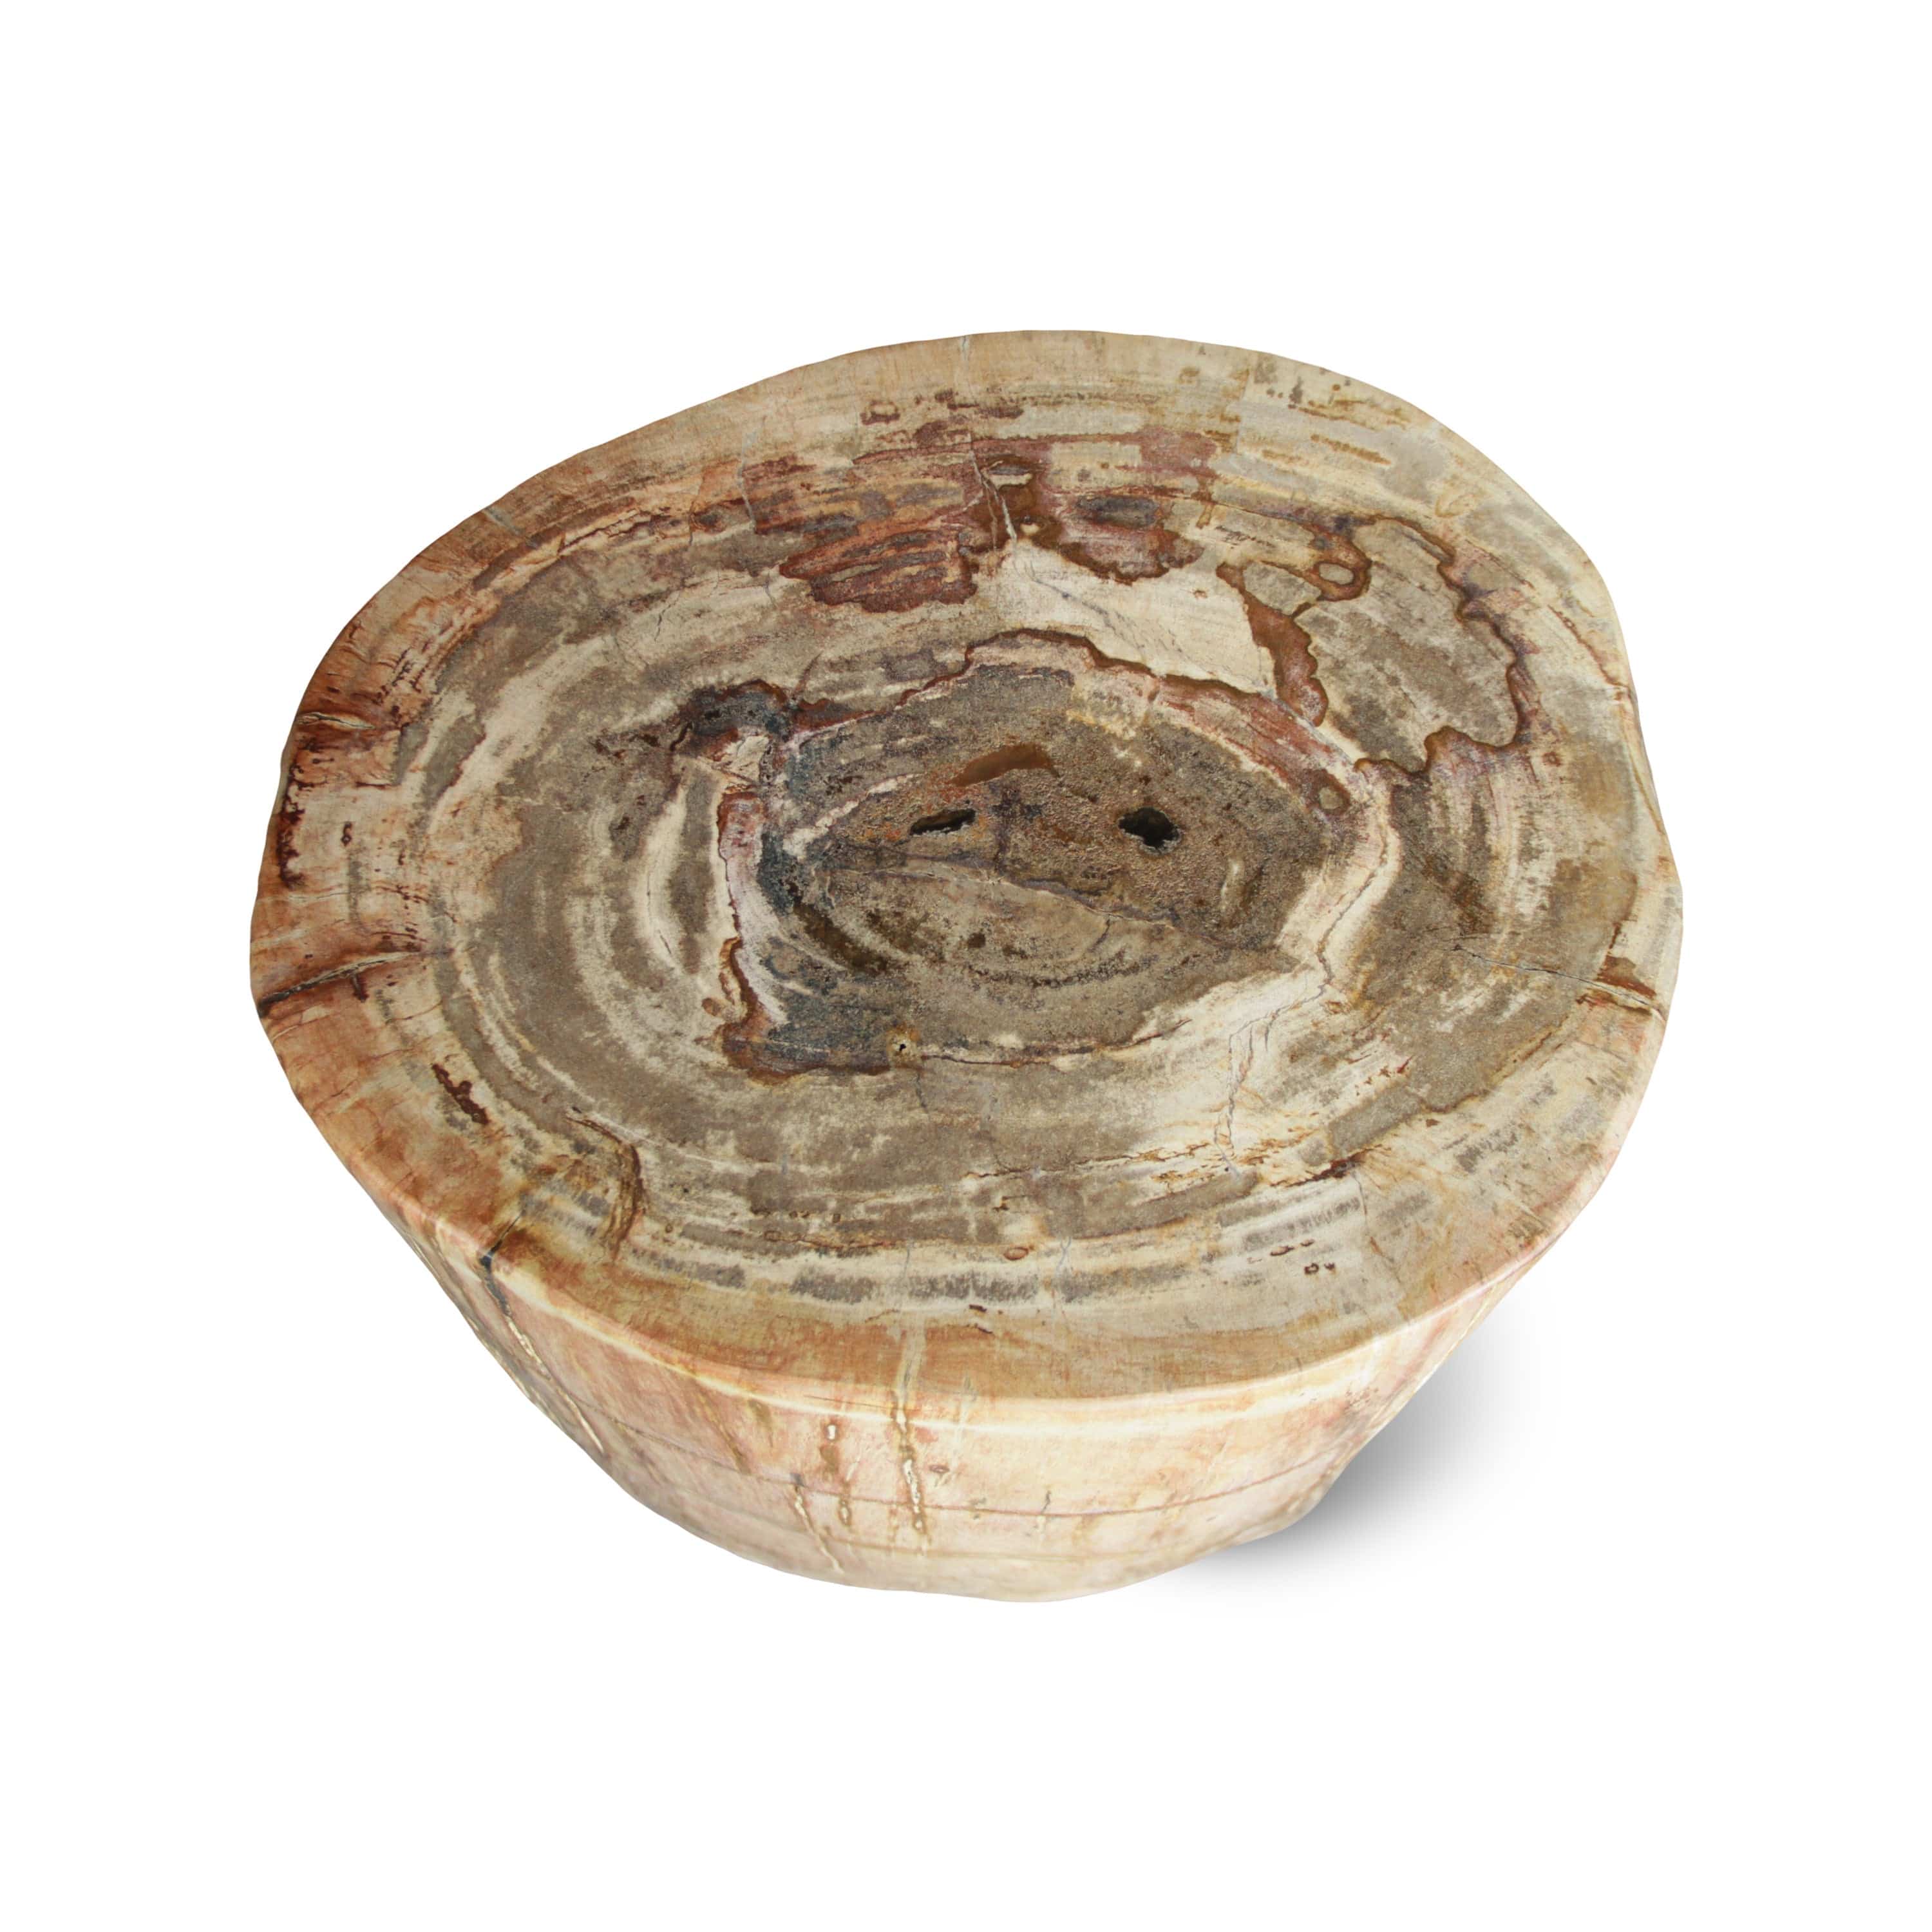 Kalifano Petrified Wood Petrified Wood Round Stump / Stool from Indonesia - 16" / 231 lbs PWS4200.004